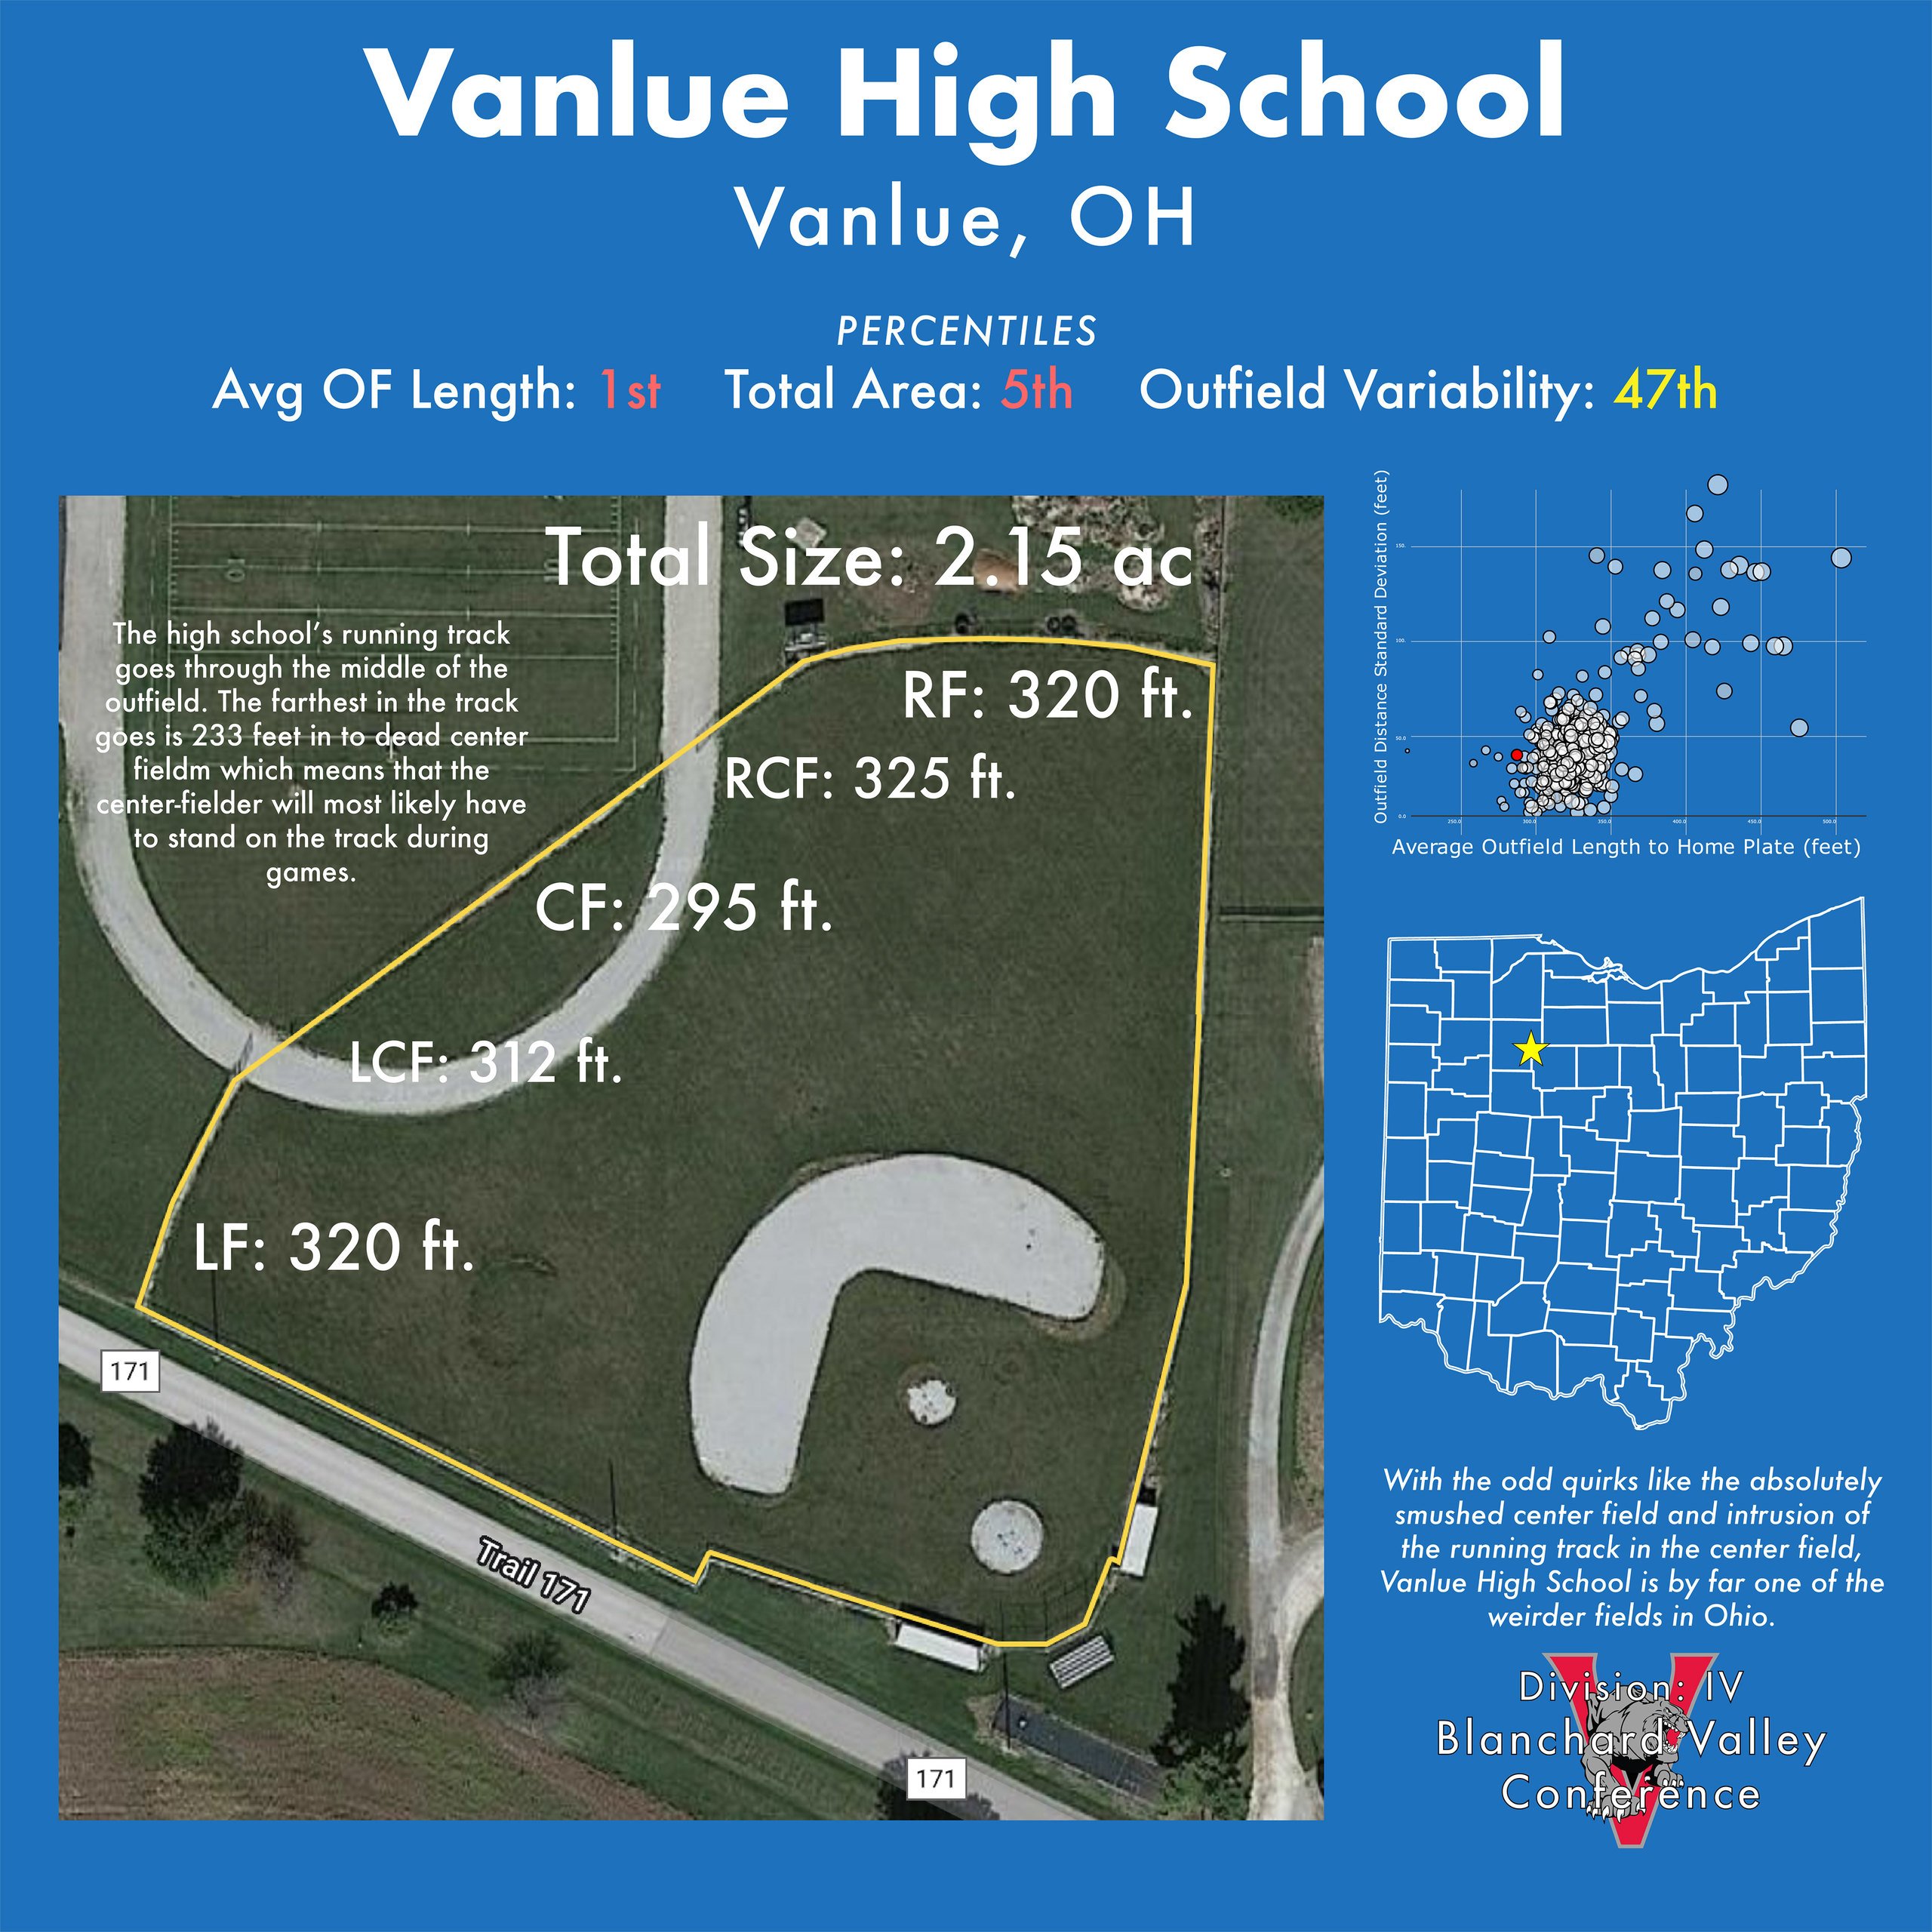 Graphic shows unique baseball field dimensions at Vanlue High School.